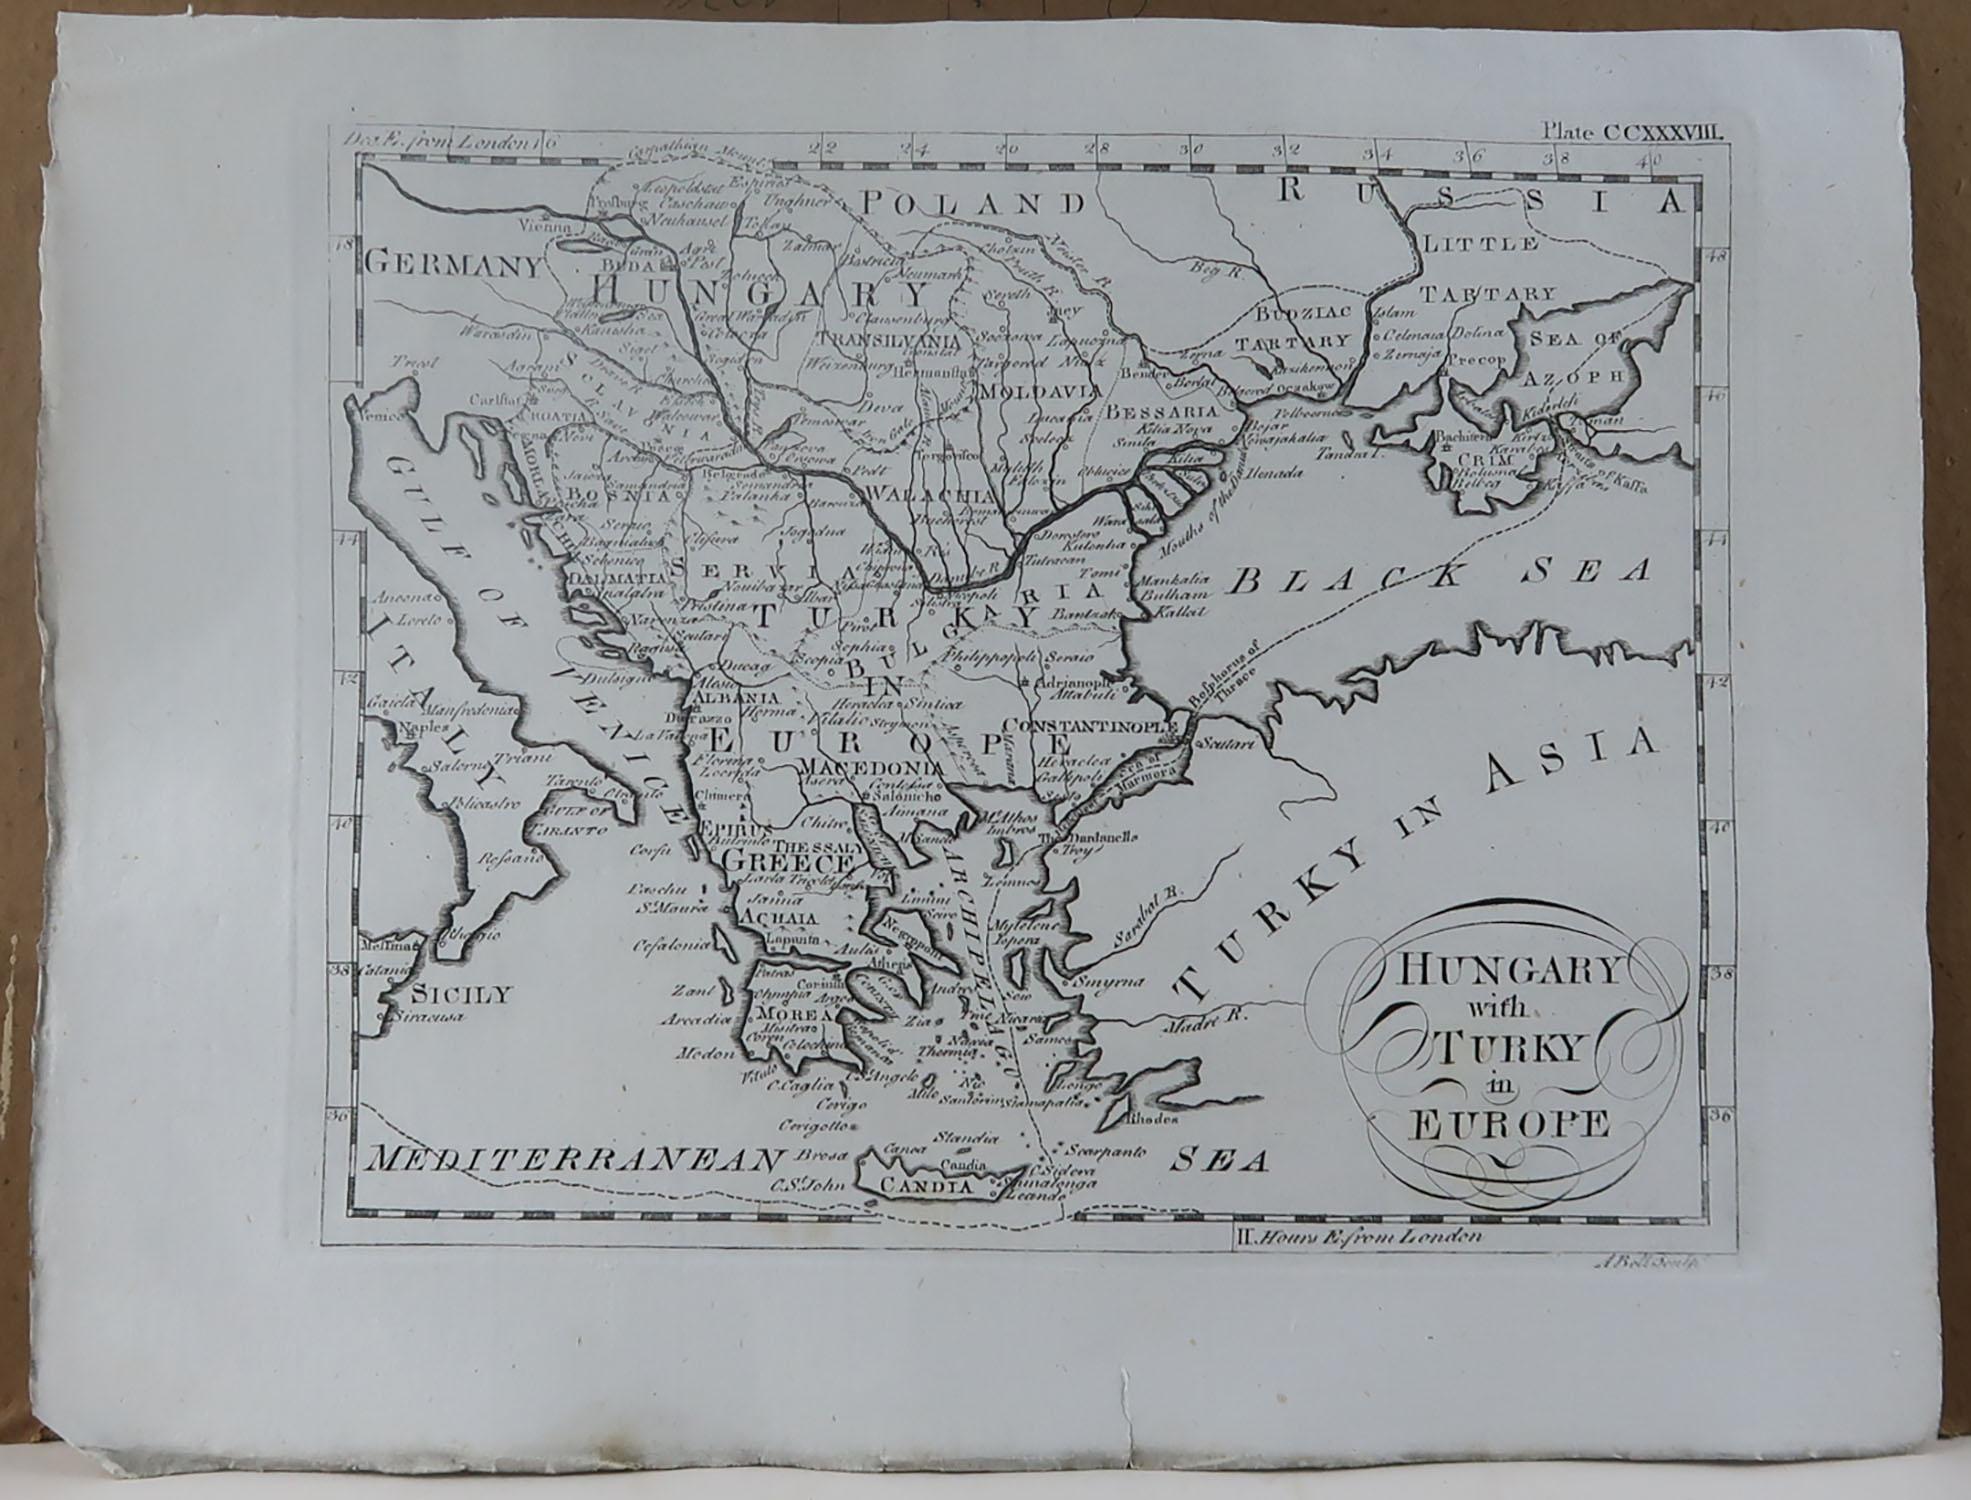 Other Original Antique Map of Greece, circa 1790